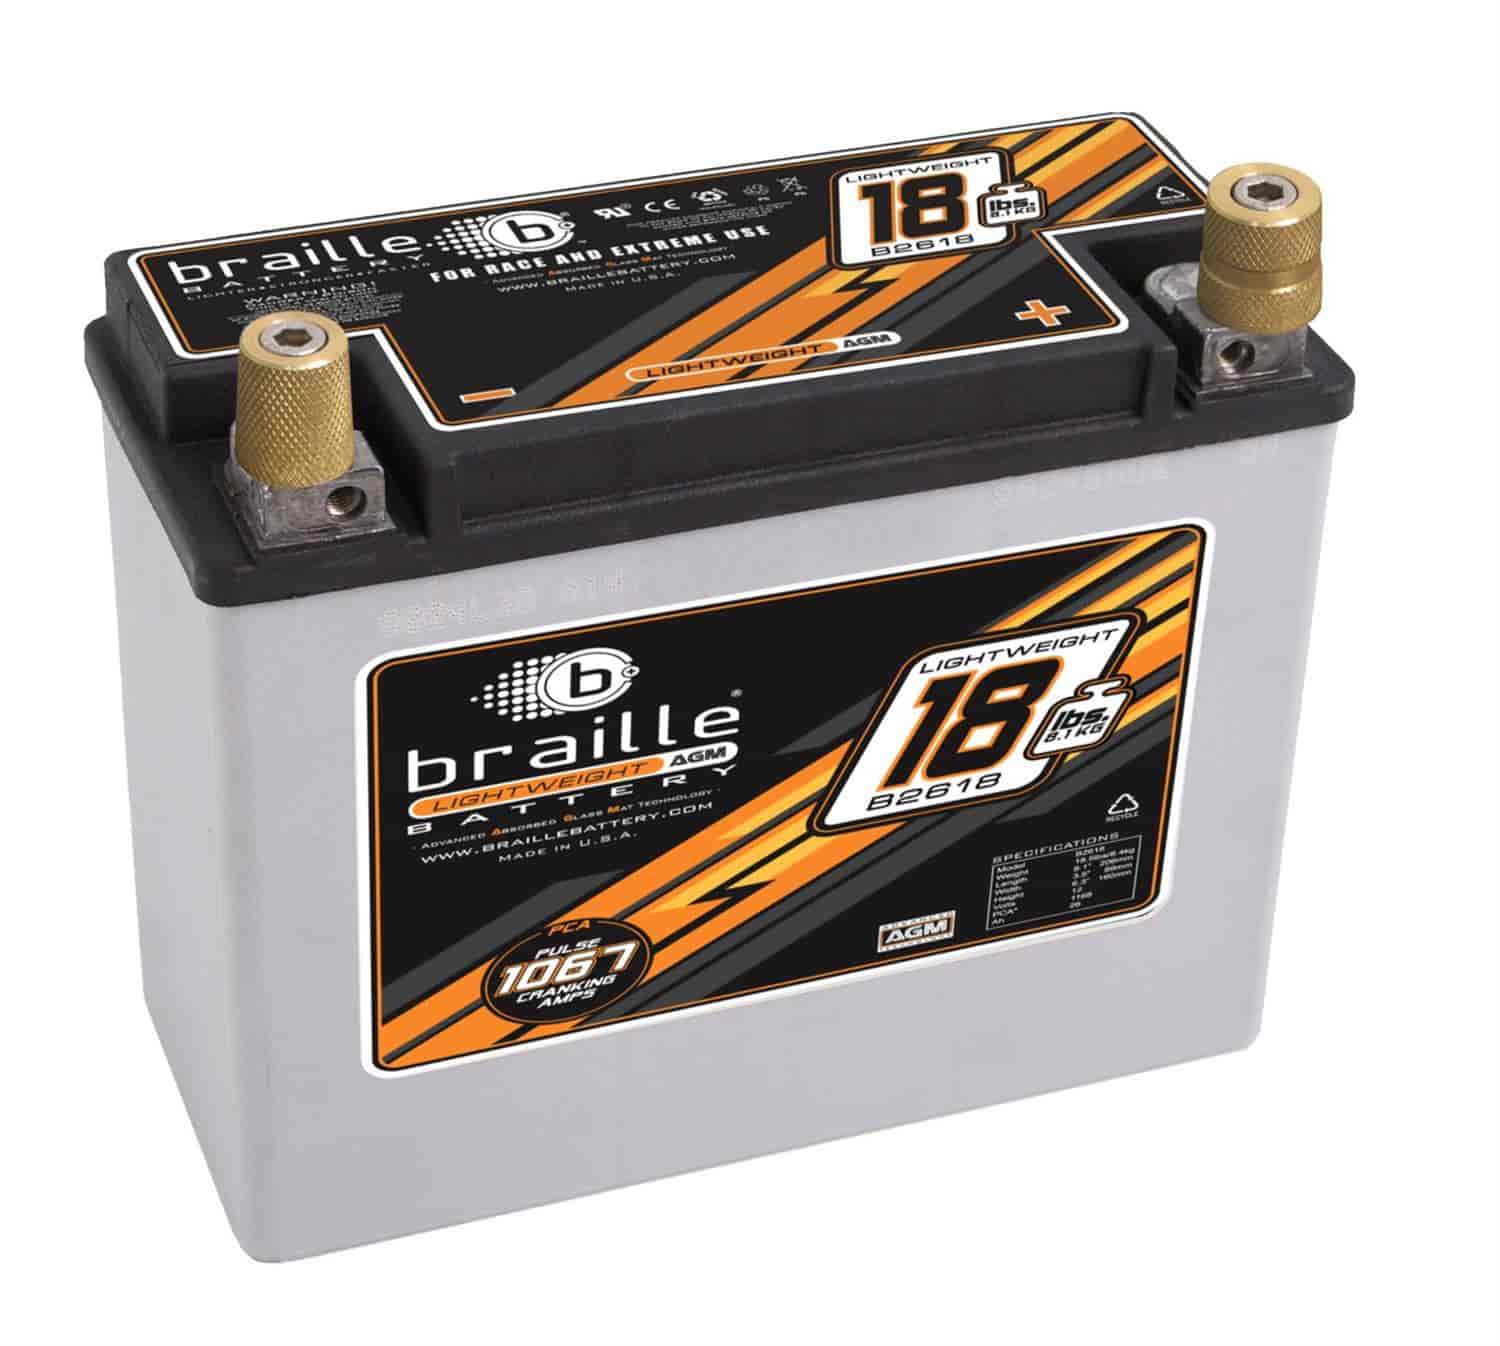 Advanced AGM Lightweight Racing Battery 18.5 lbs